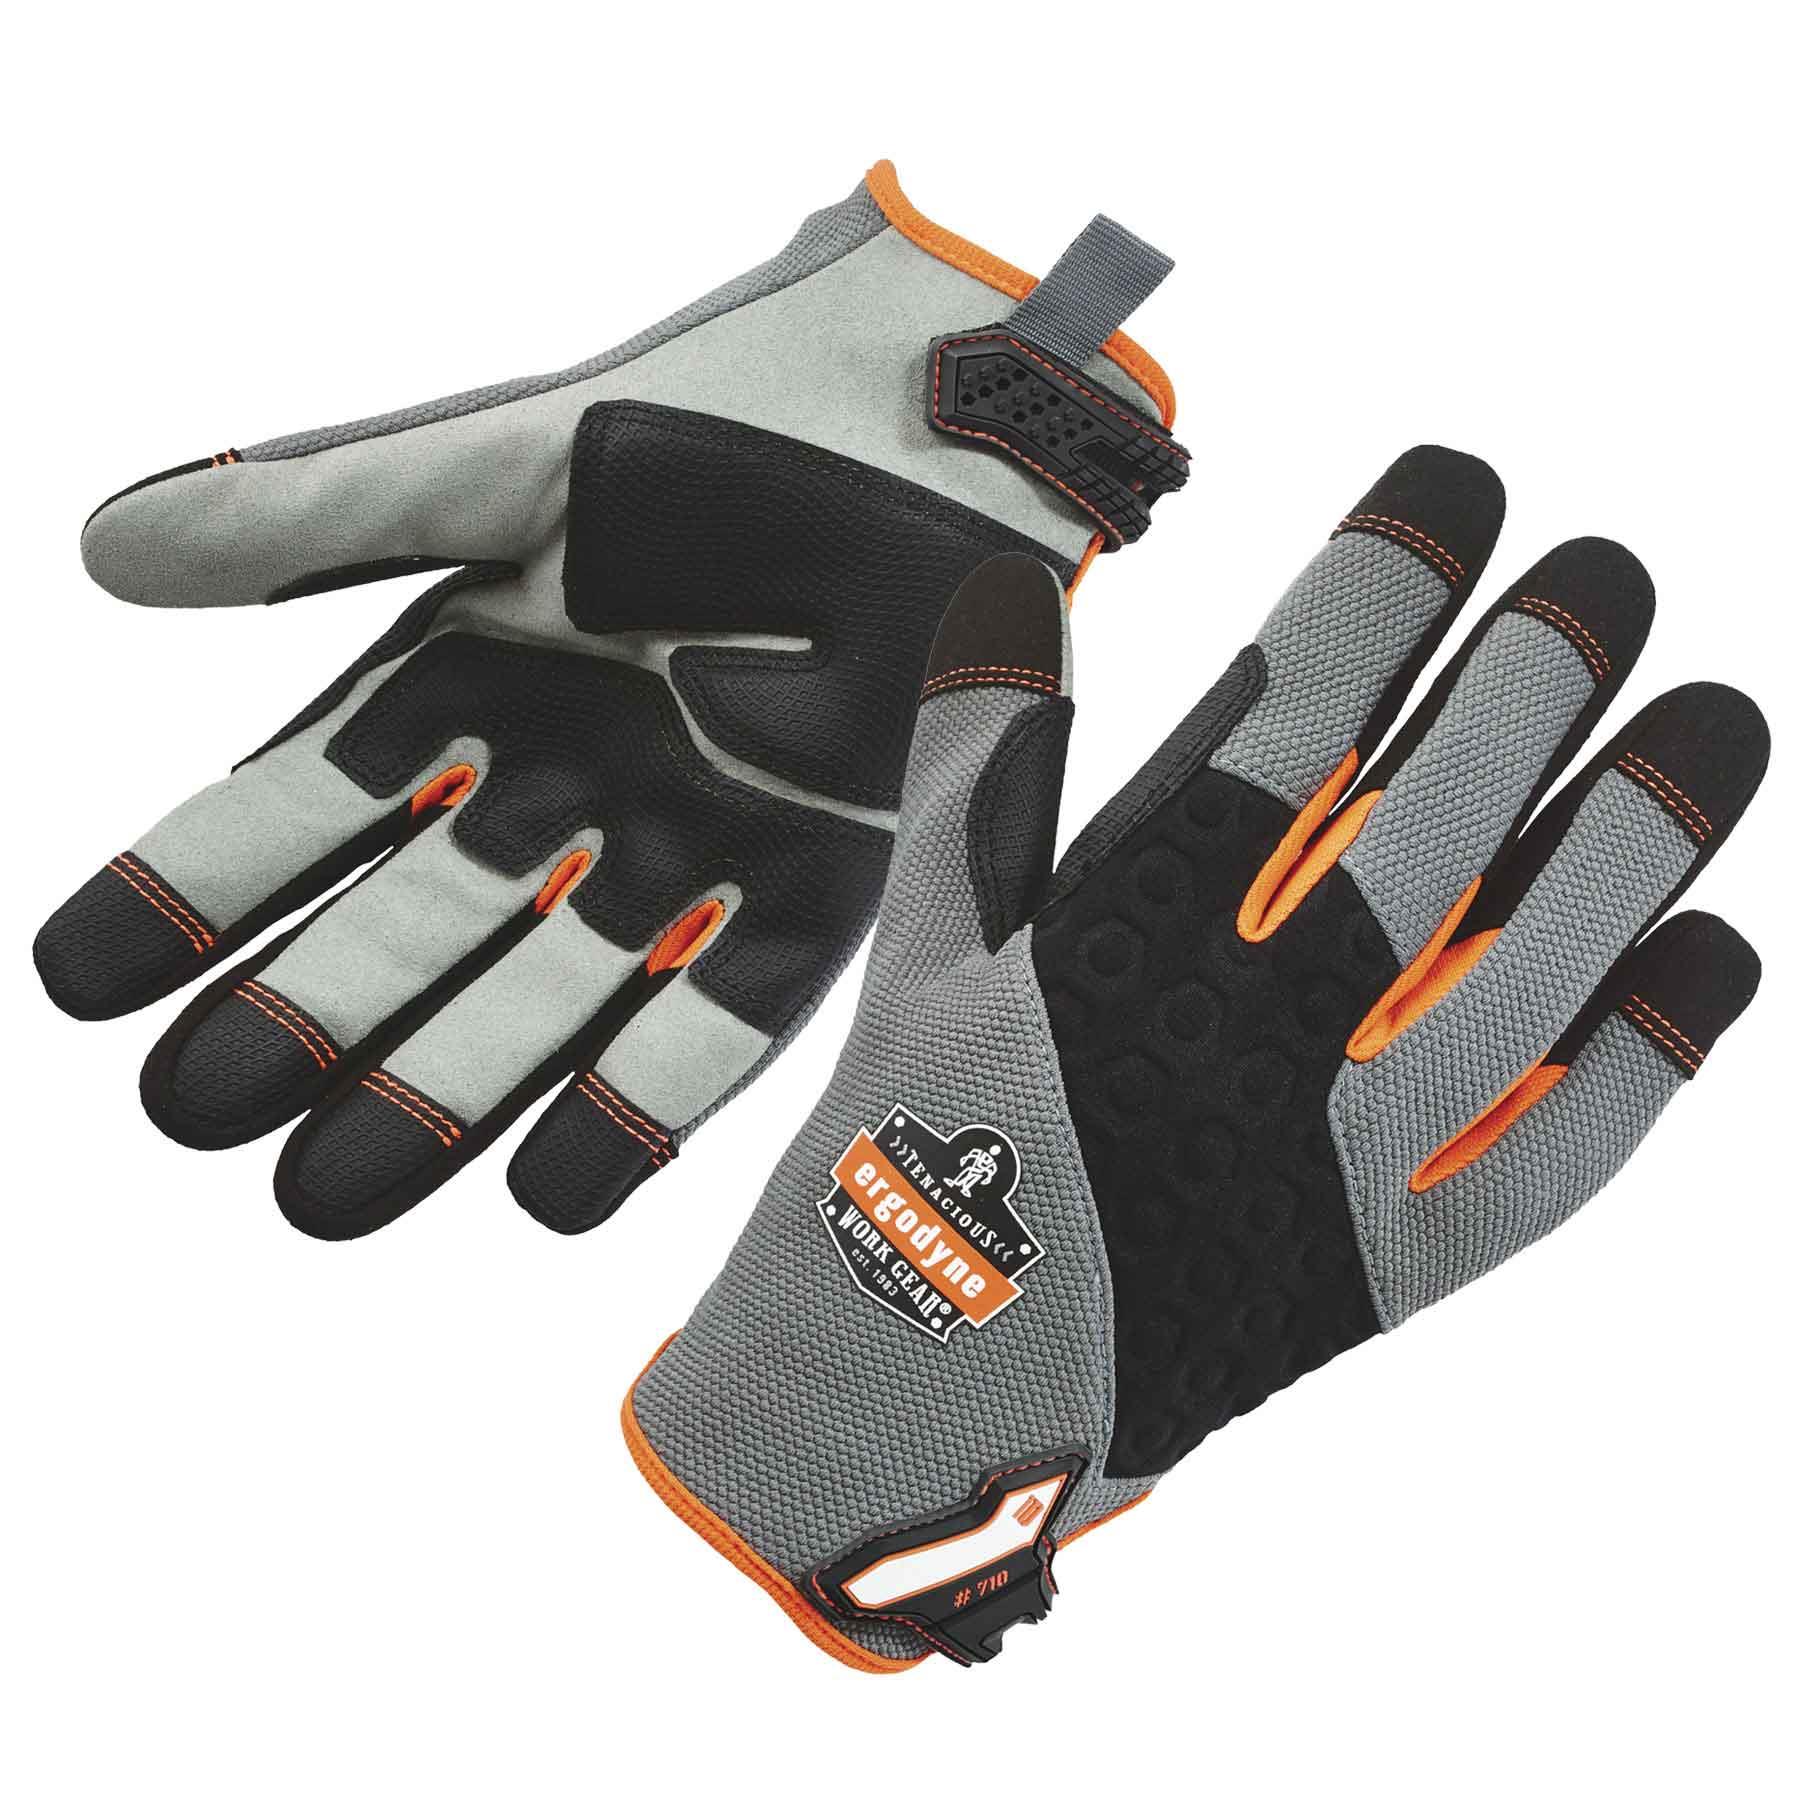 PROFLEX 710 HEAVY DUTY TRADES GLOVE - Mechanics Gloves